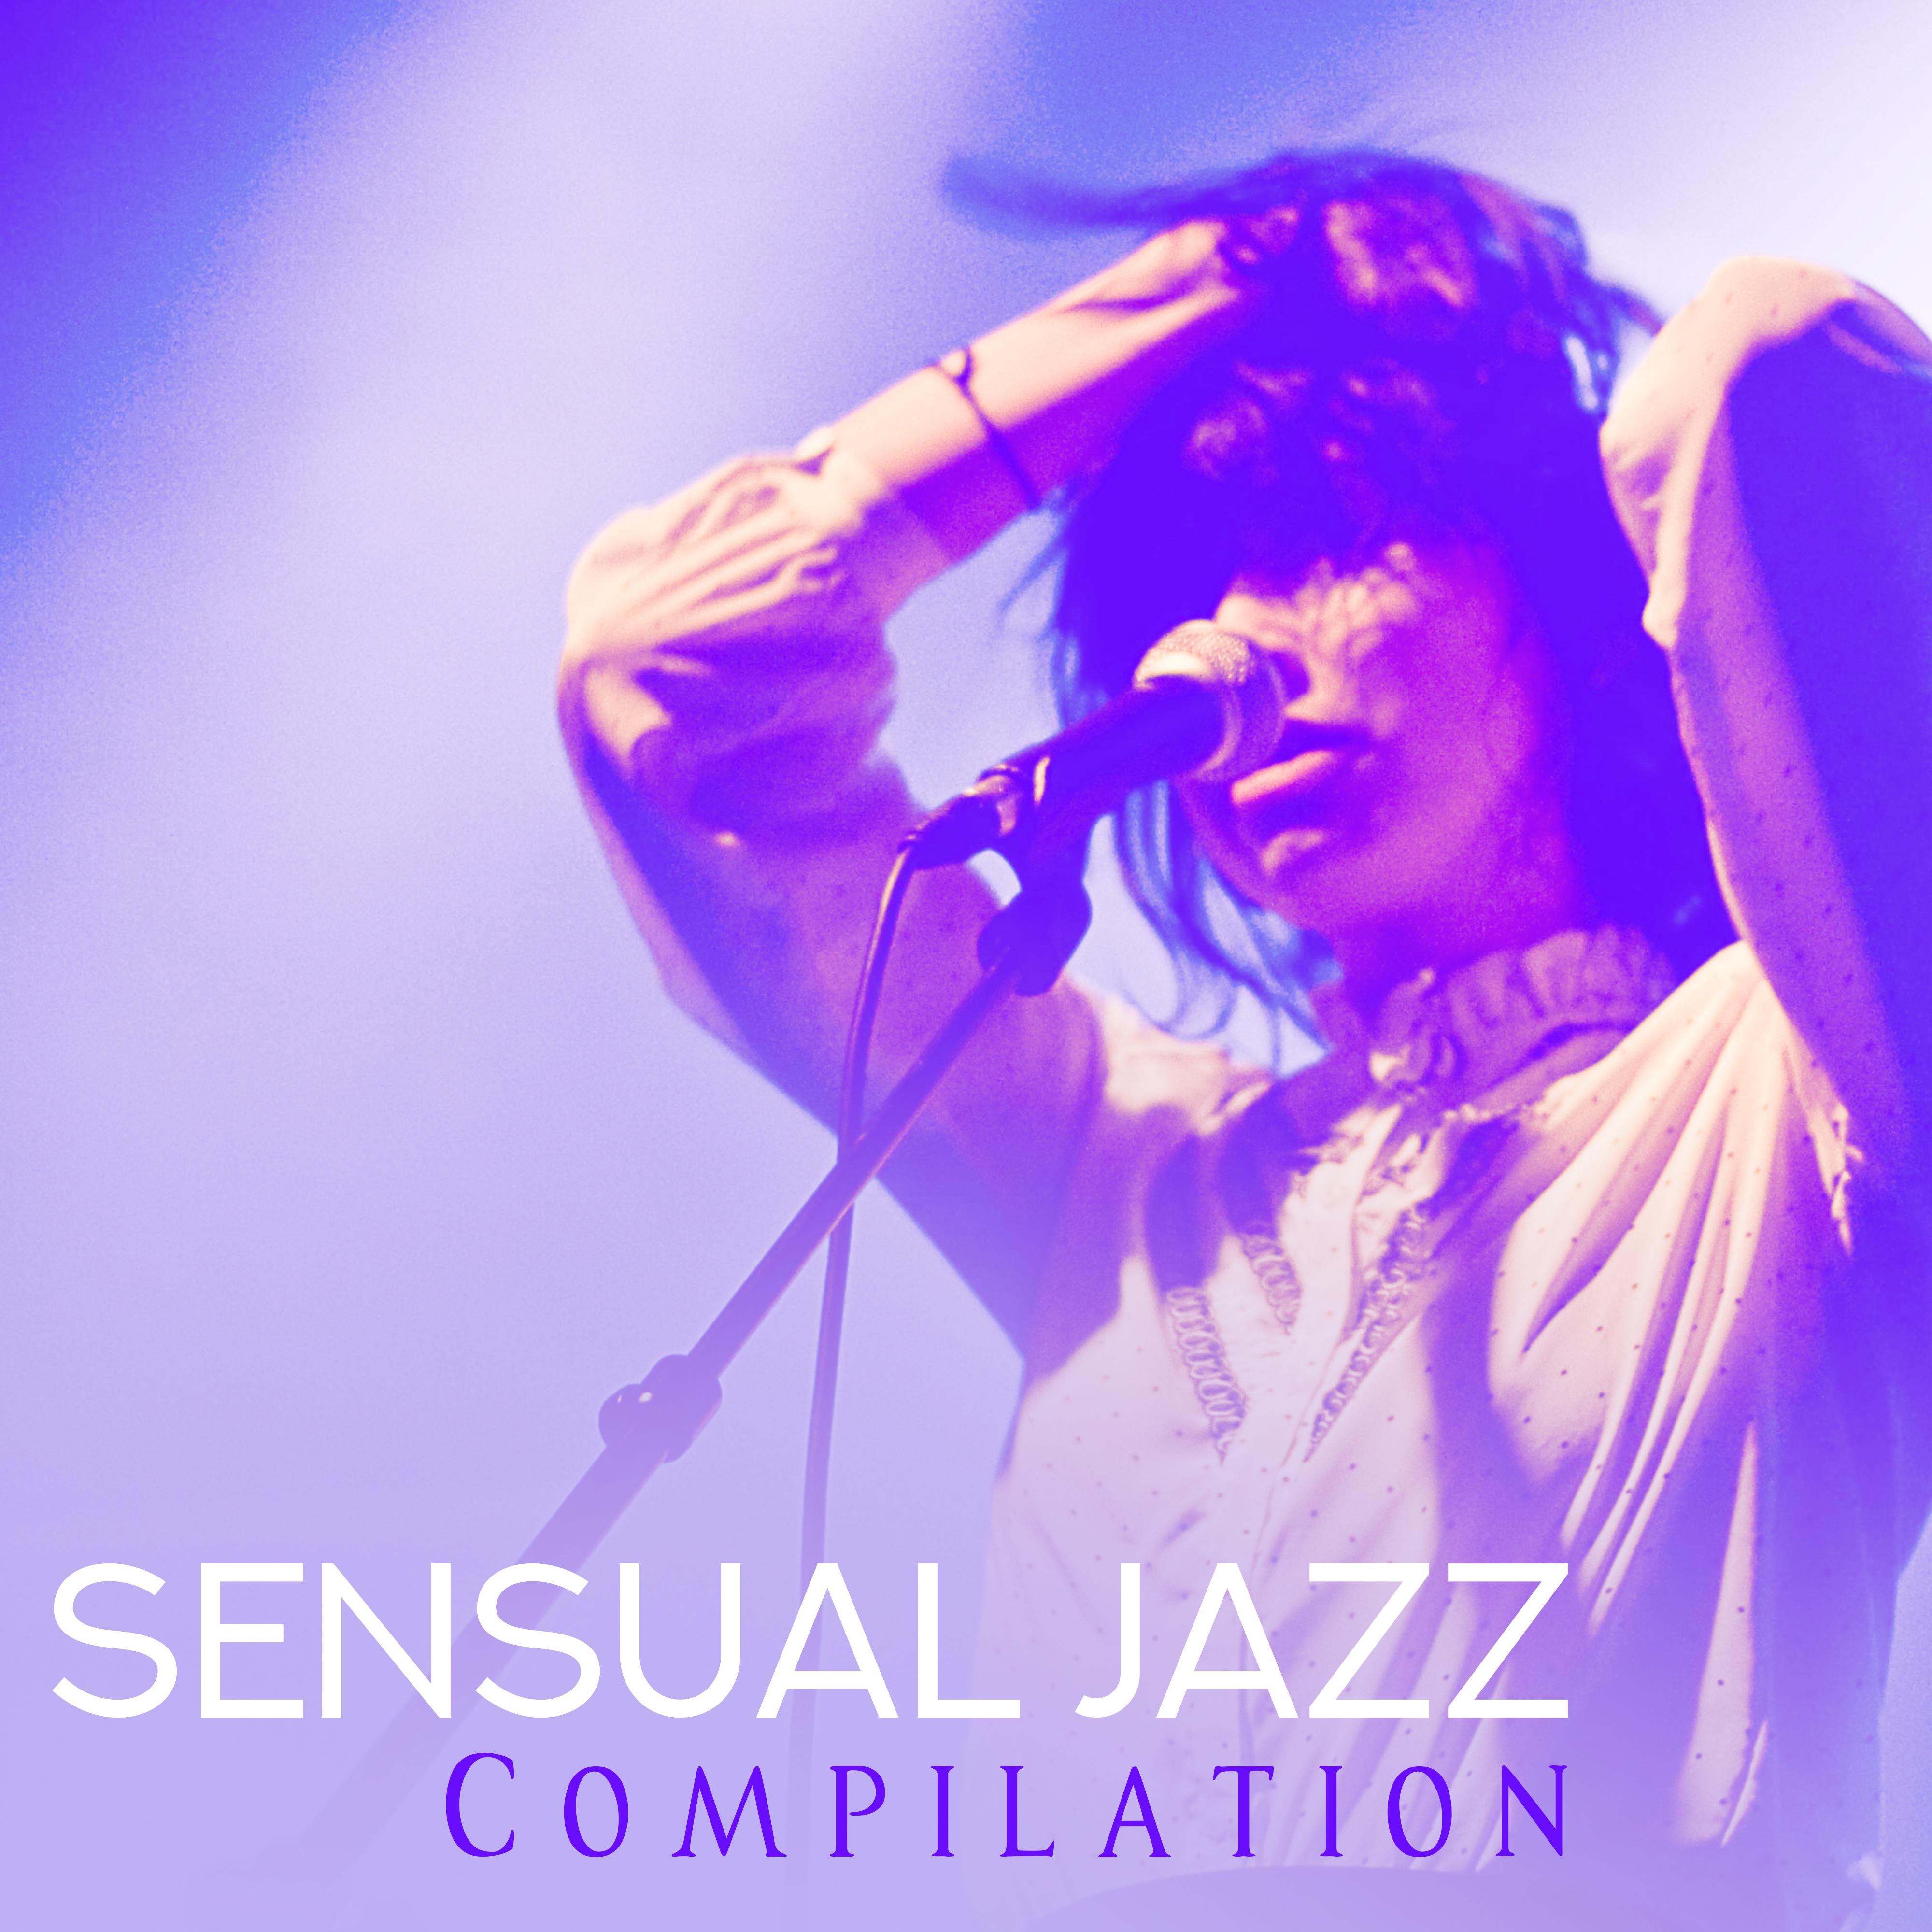 Sensual Jazz Compilation – **** Vibes of Jazz, Instrumental Music, Relaxed Jazz, Erotic Jazz